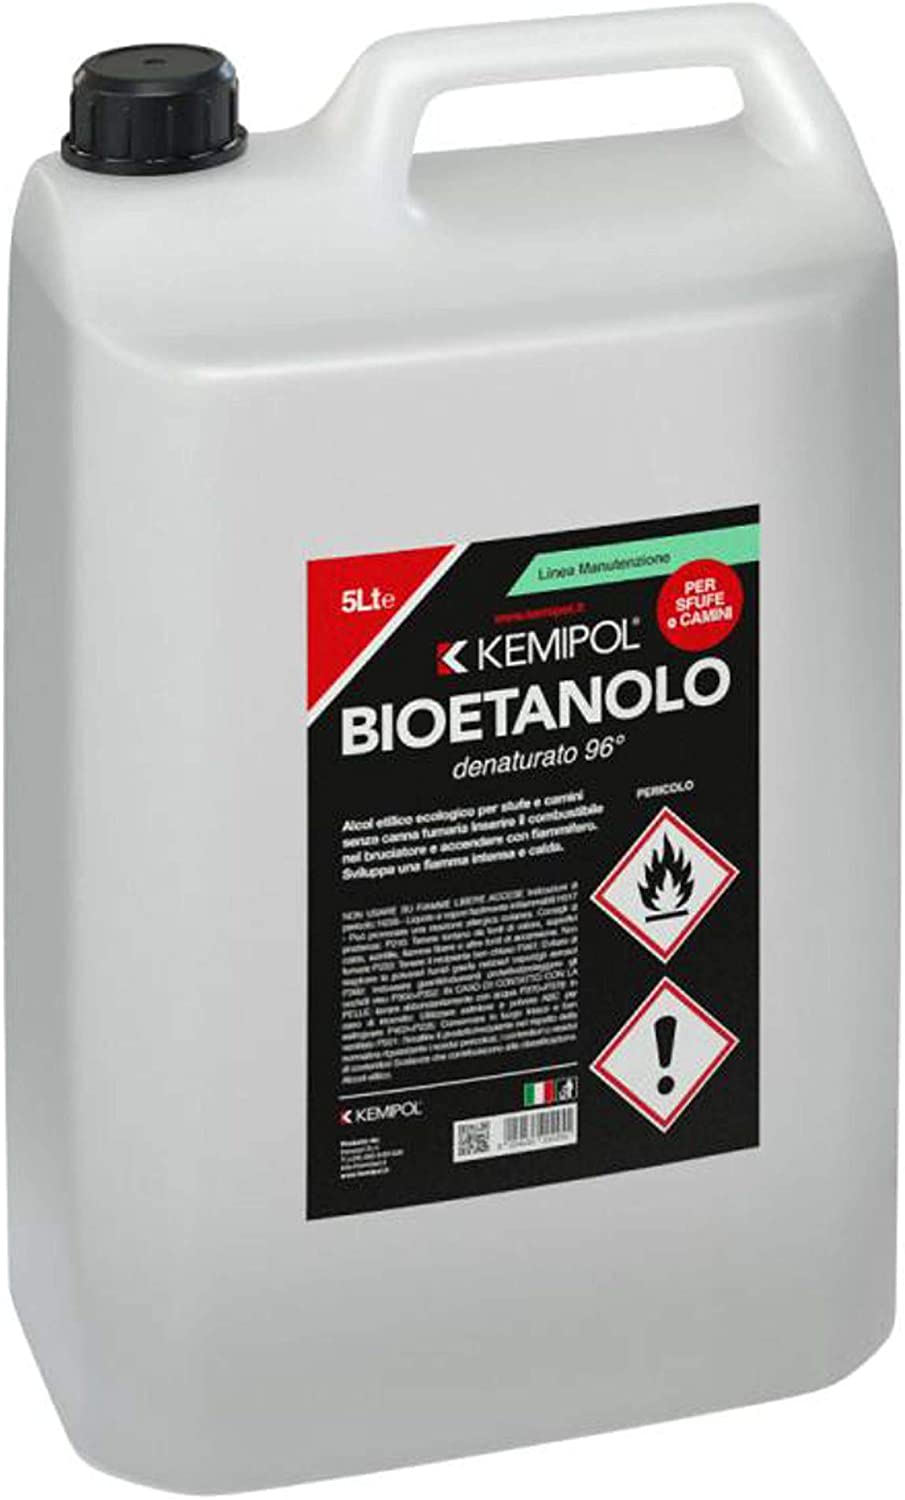 Combustibile liquido bioetanolo lt. 1